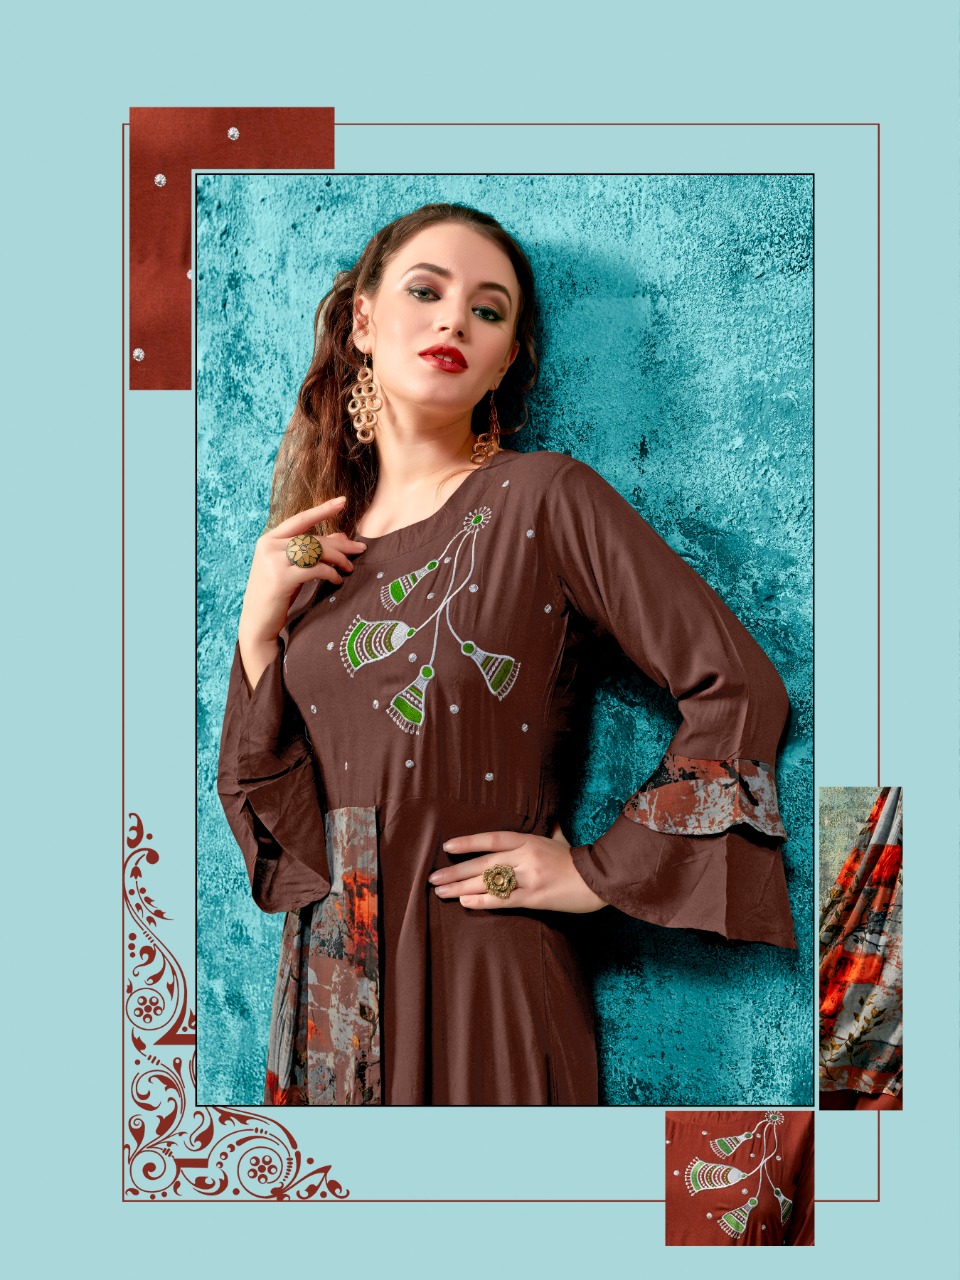 Diksha fashion free style vol 1 party wear fancy kurties wholesaler Surat